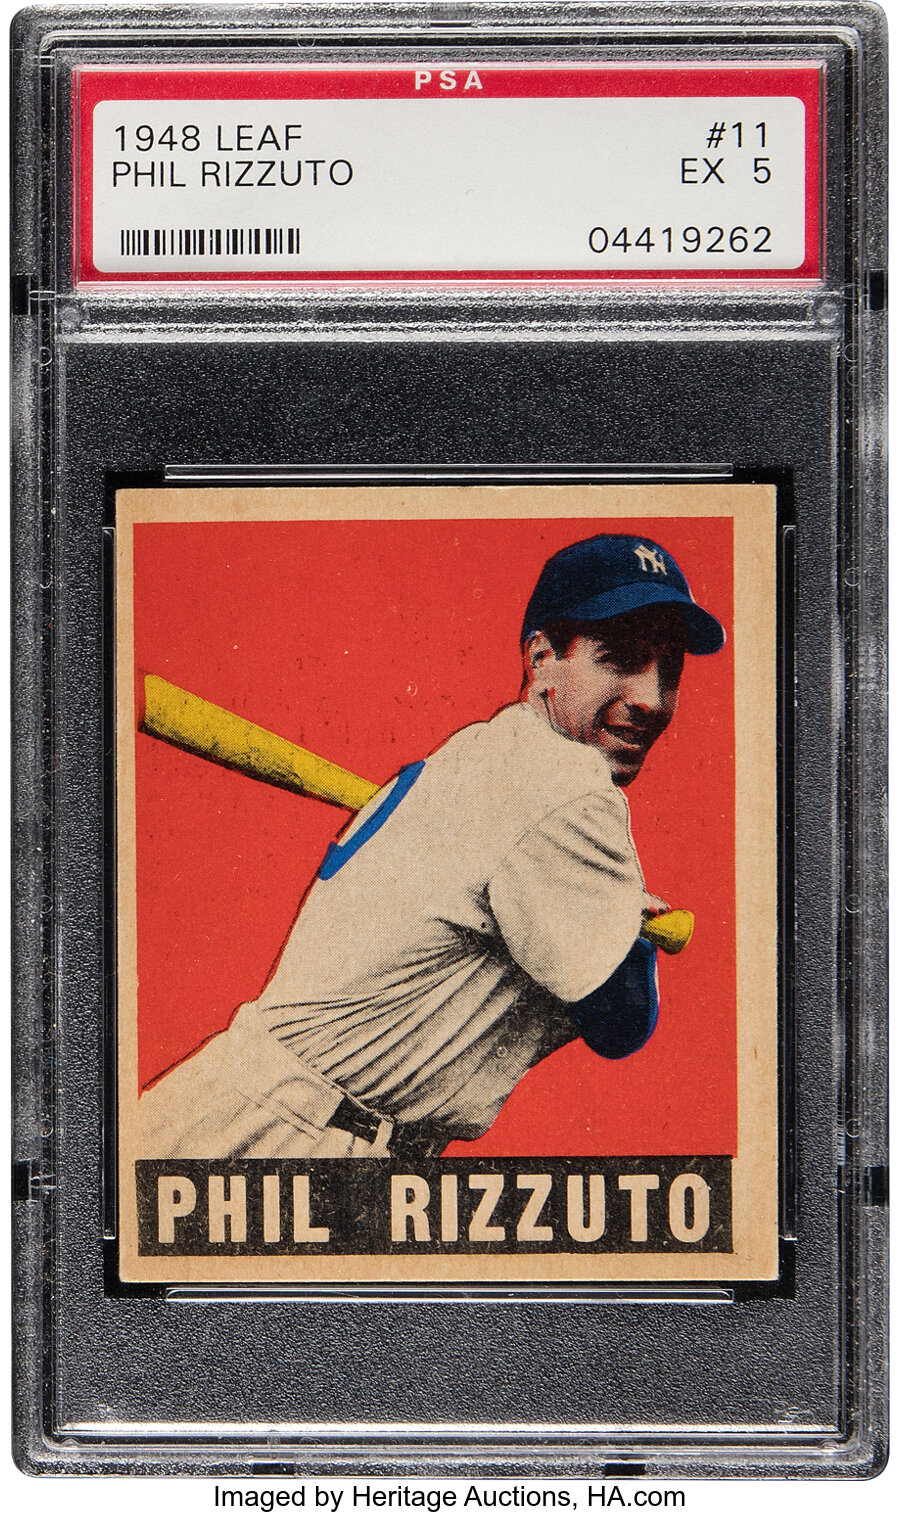 1948 Leaf Phil Rizzuto Rookie #11 PSA 5